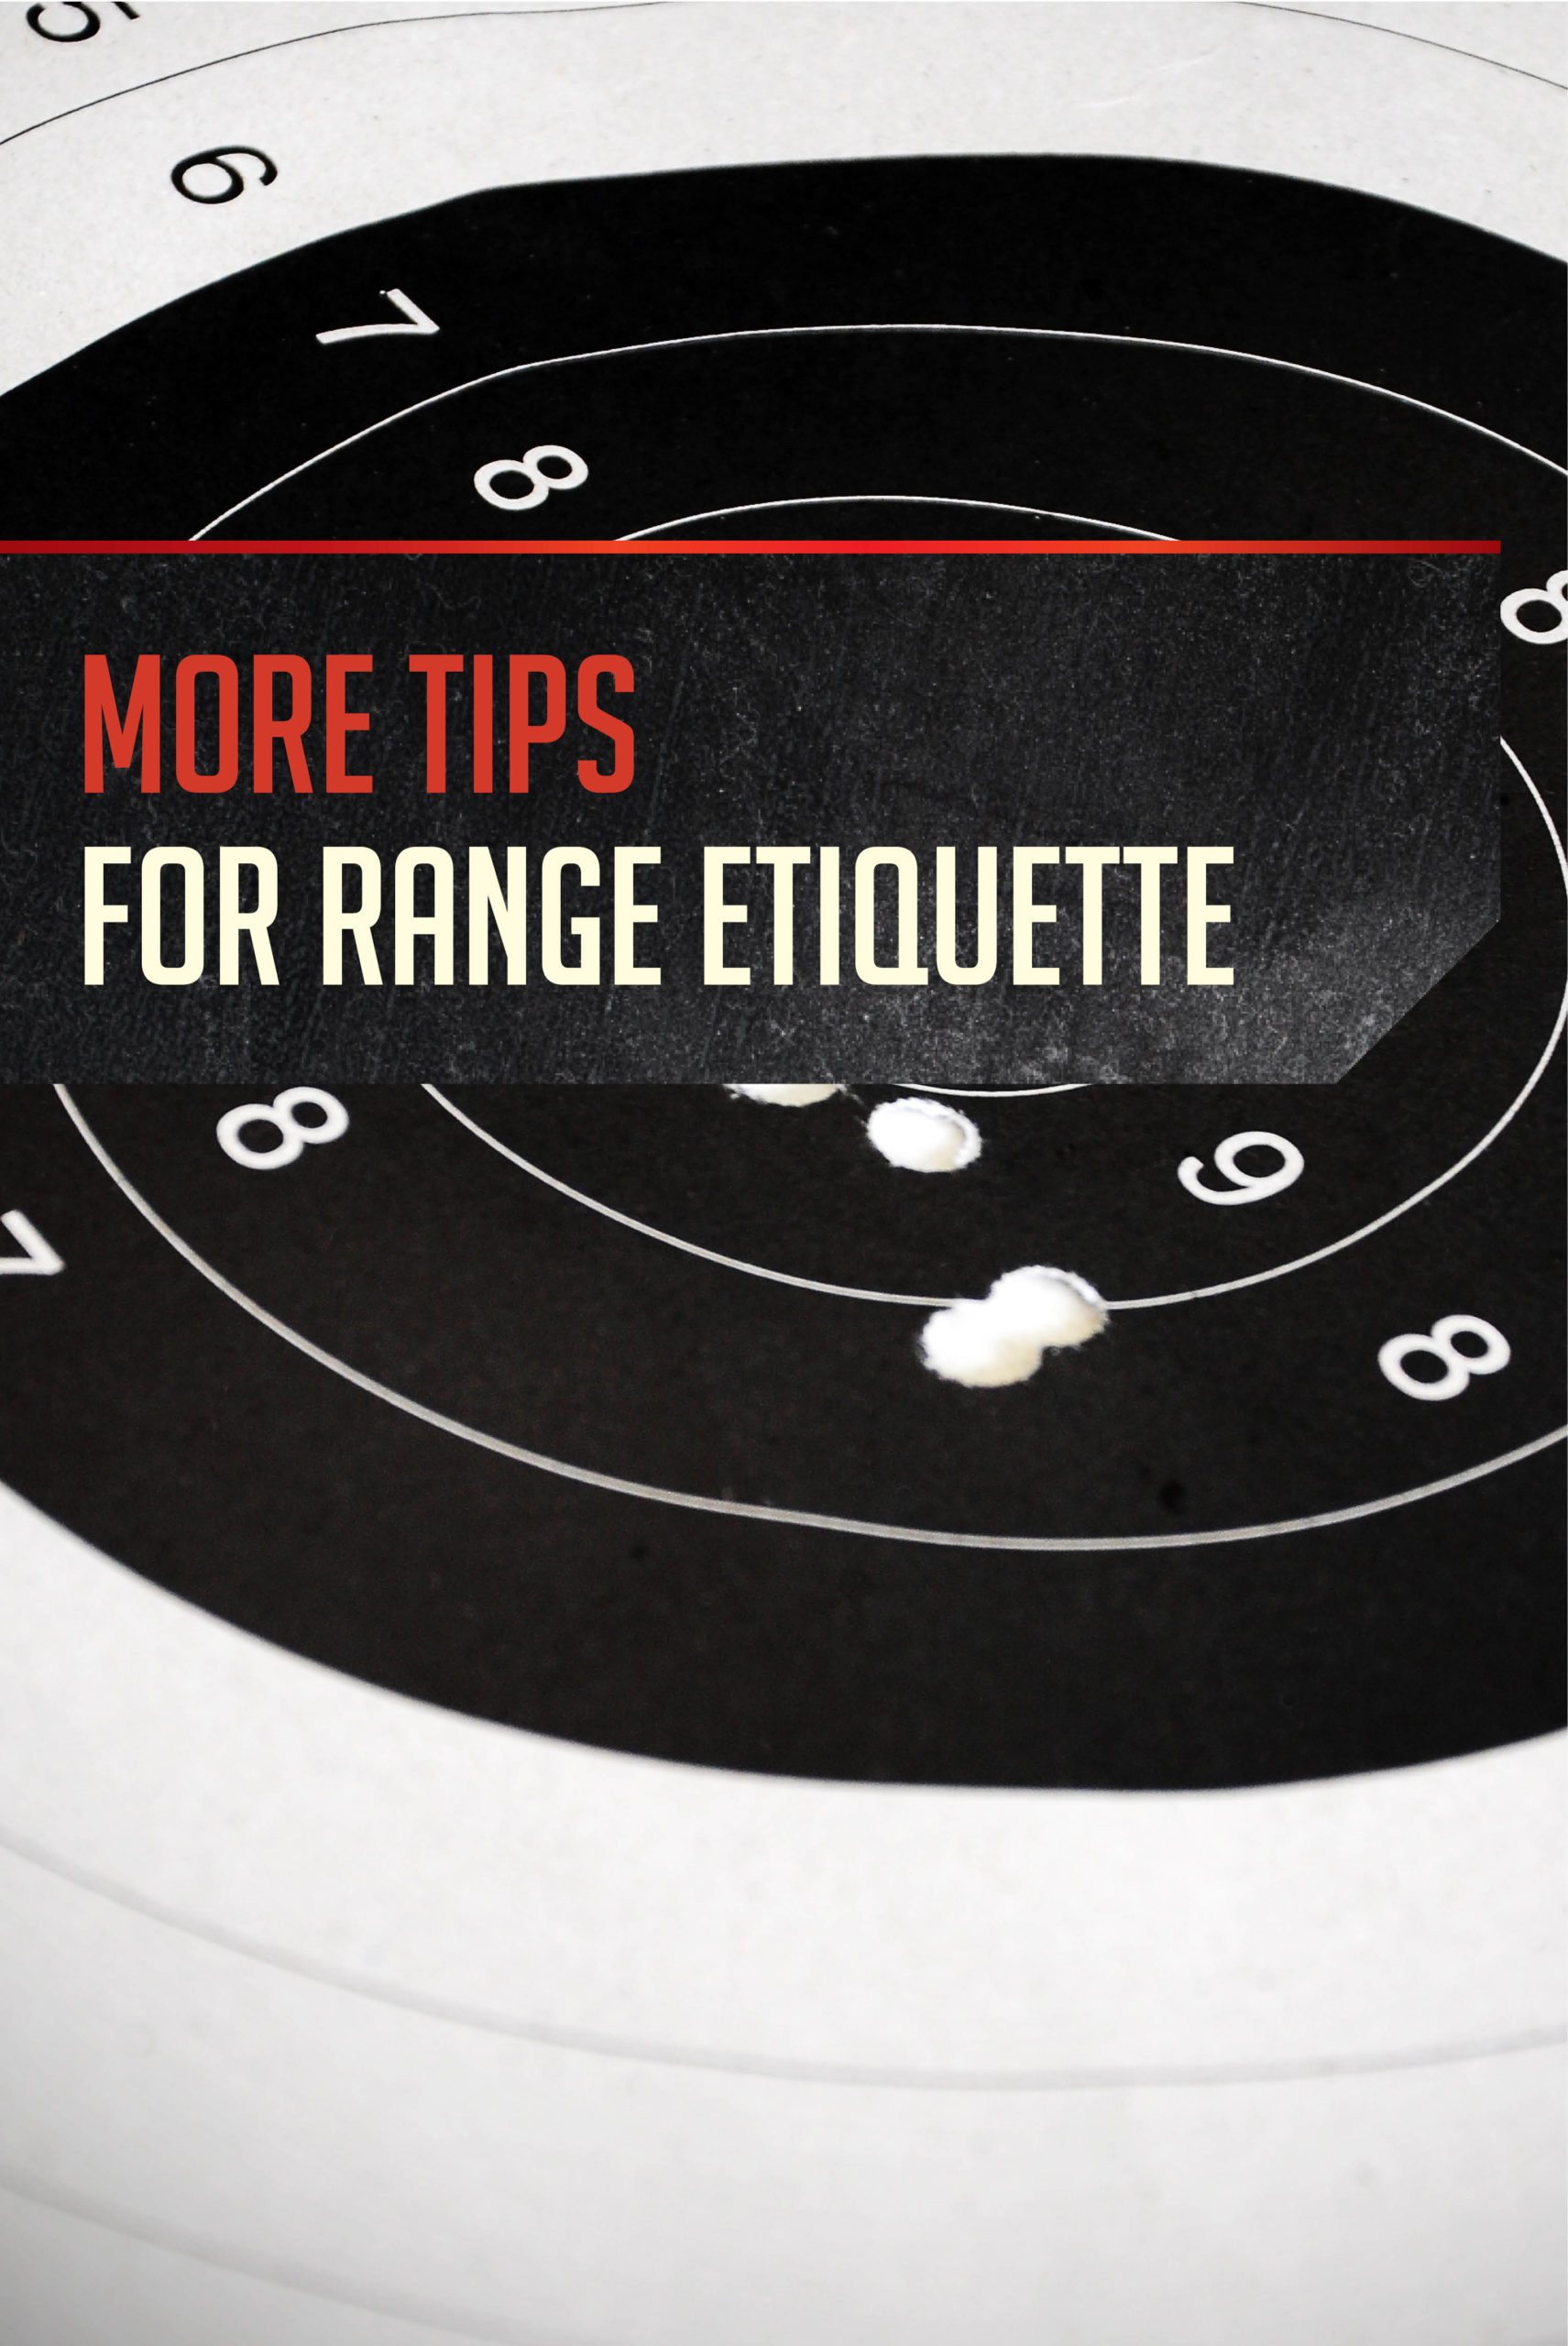 Shooting Range Tips and Etiquette pt. 2 by Gun Carrier at https://guncarriernews.wpengine.com/shooting-range-tips-etiquette-2